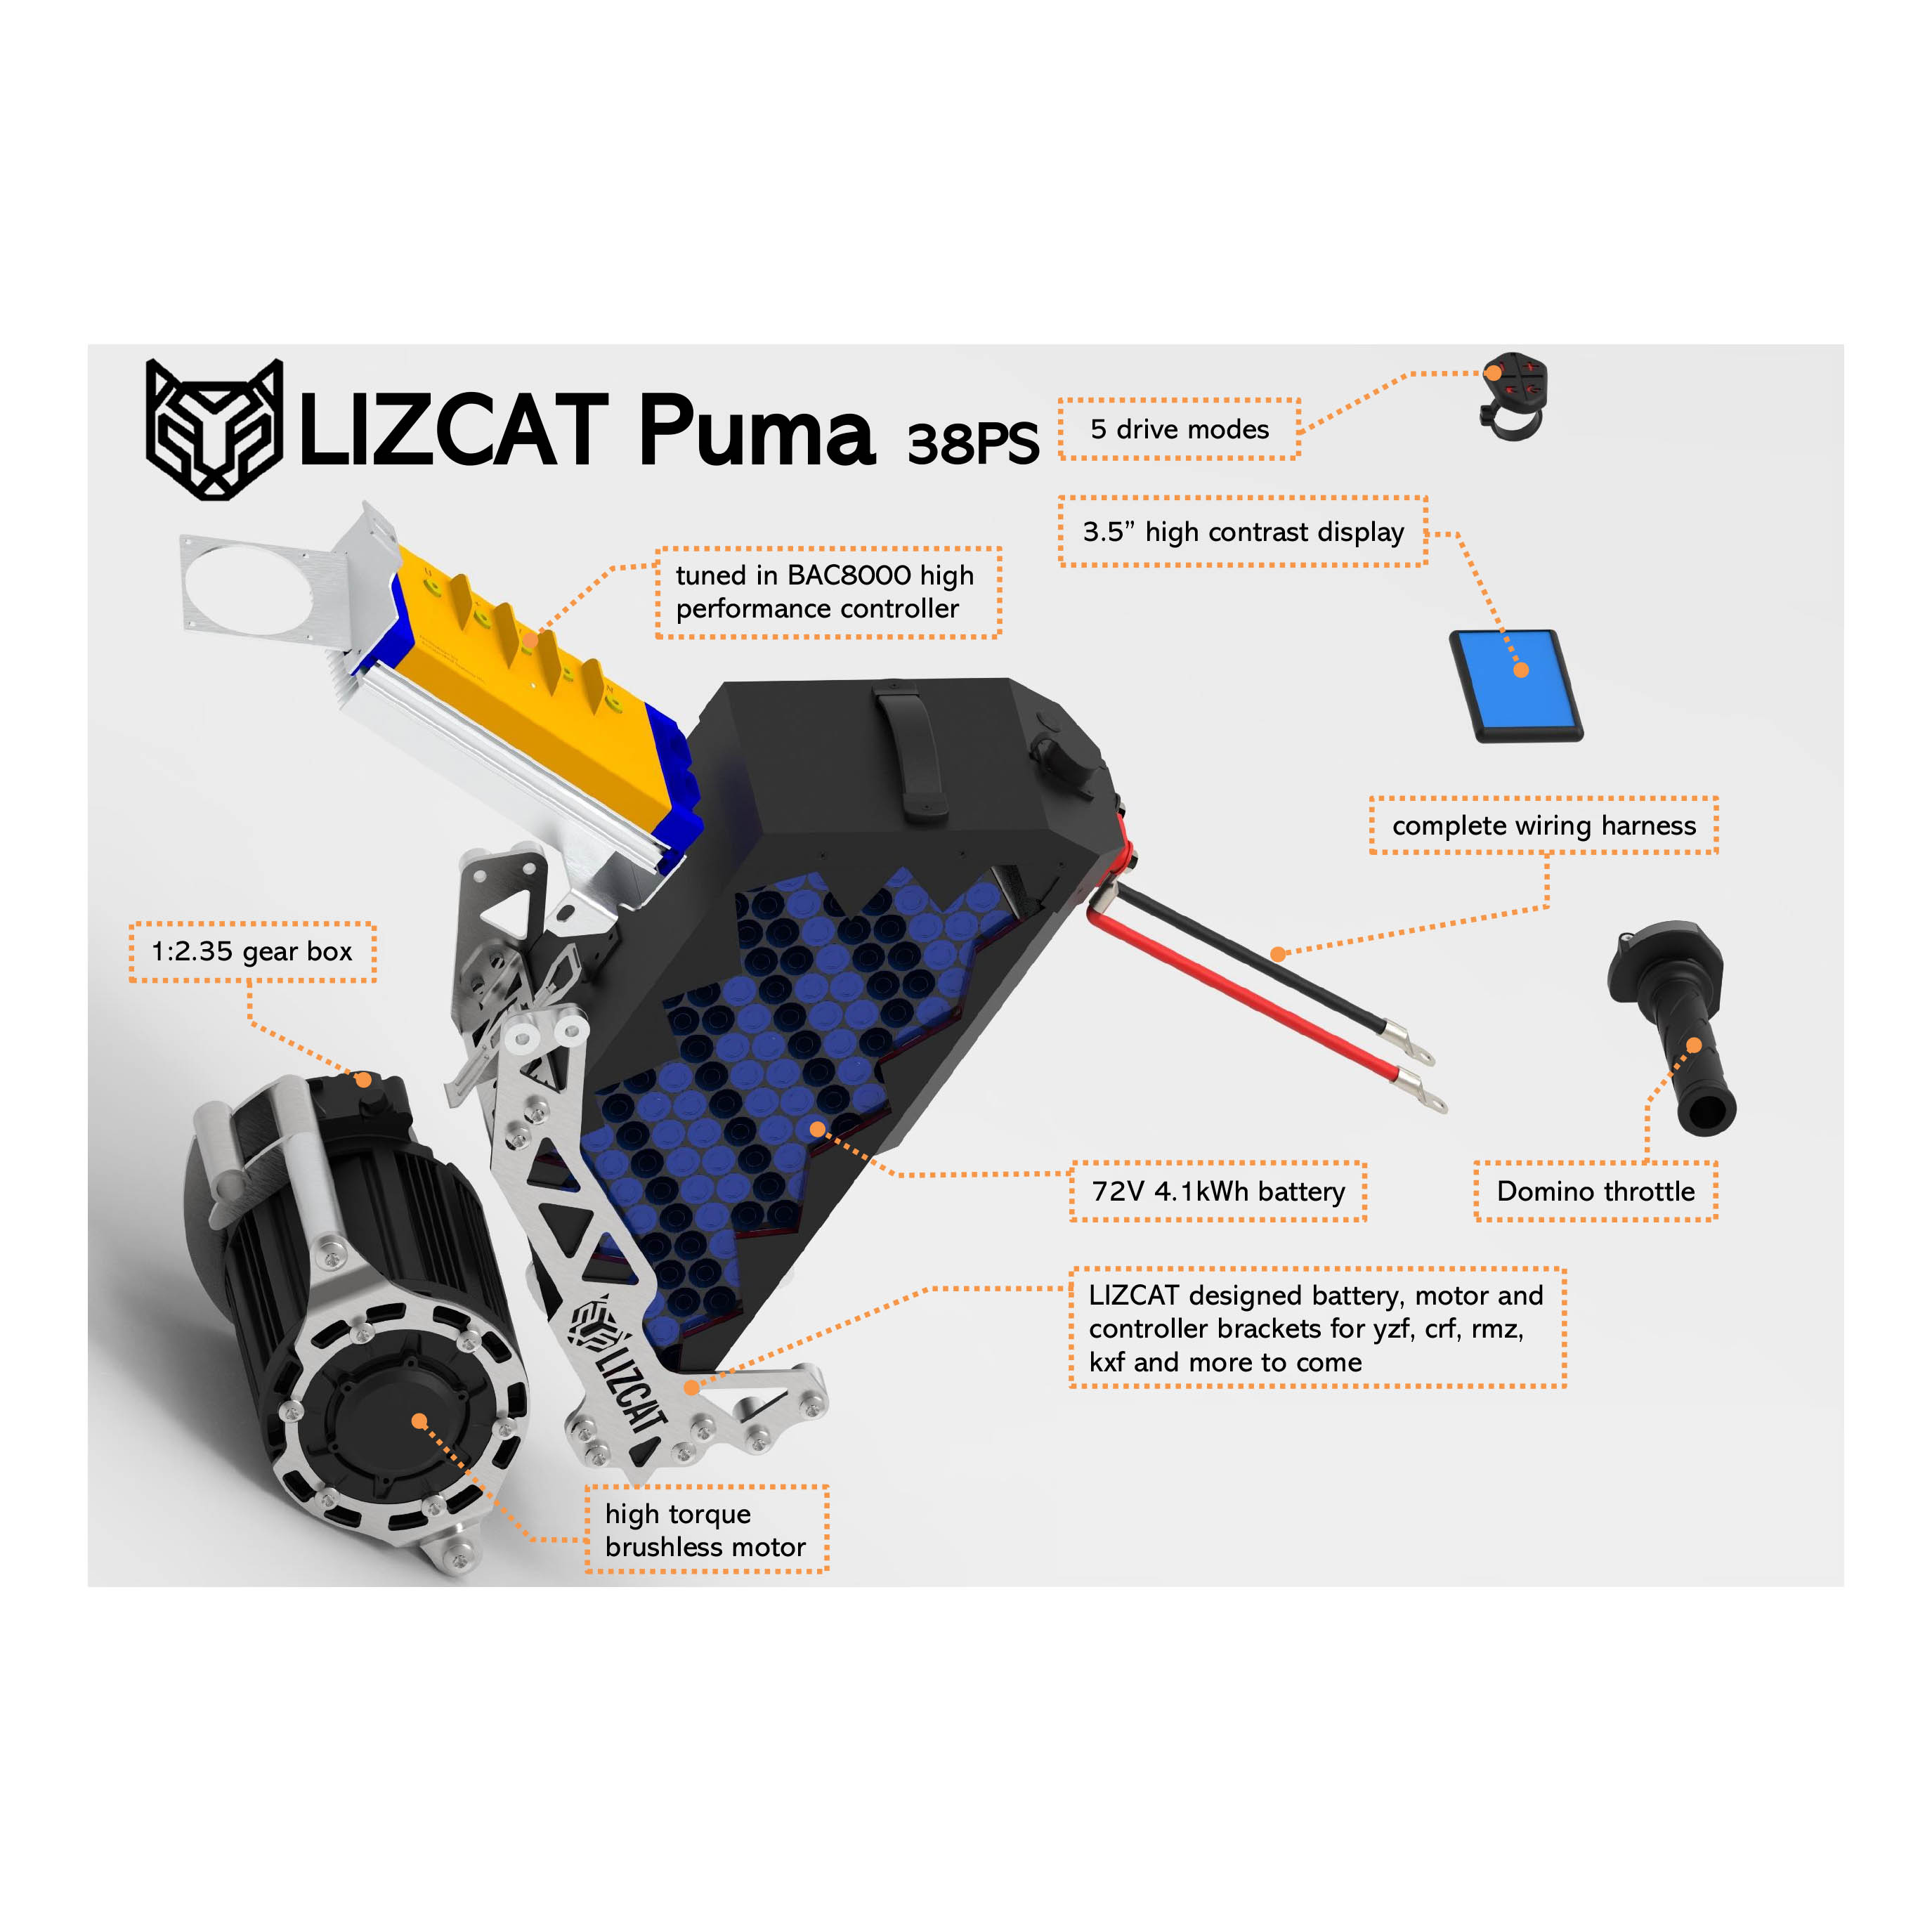 Lizcat - Puma, made in Switzerland